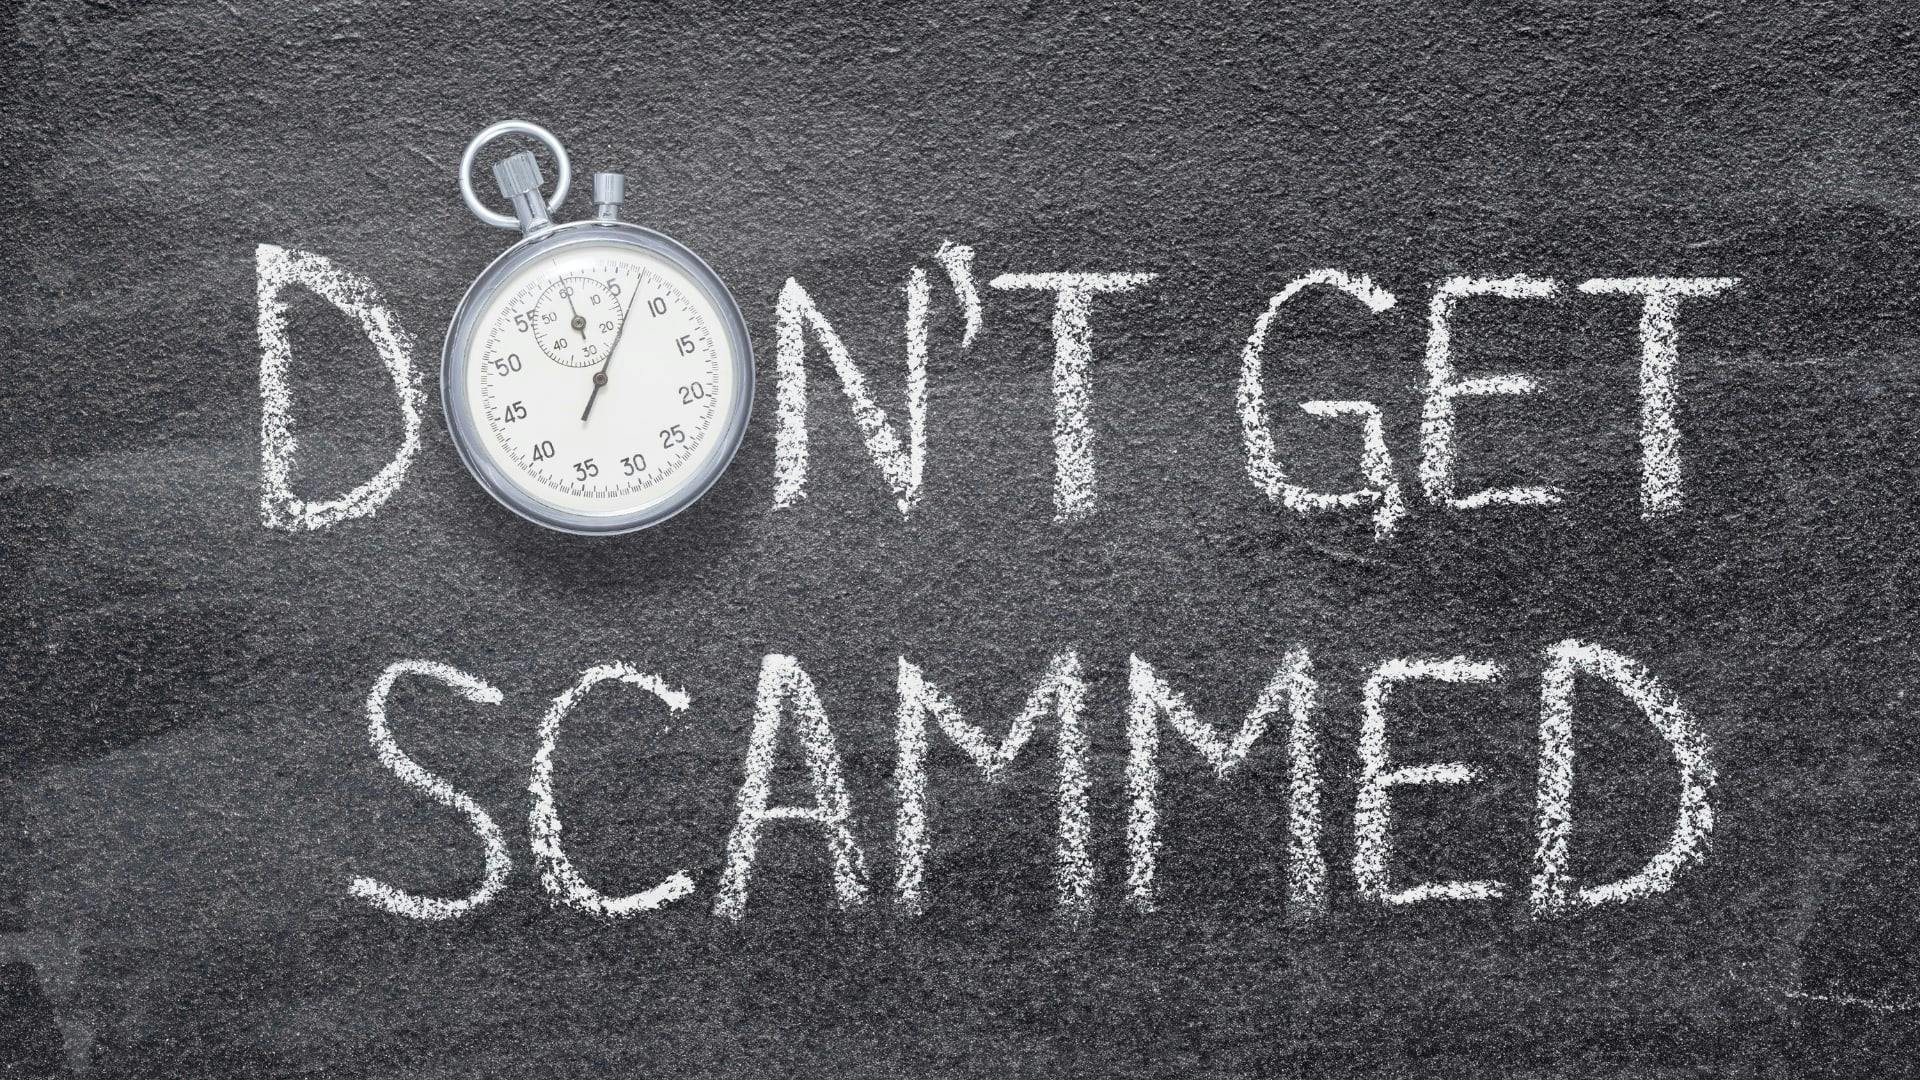 Do not get scammed